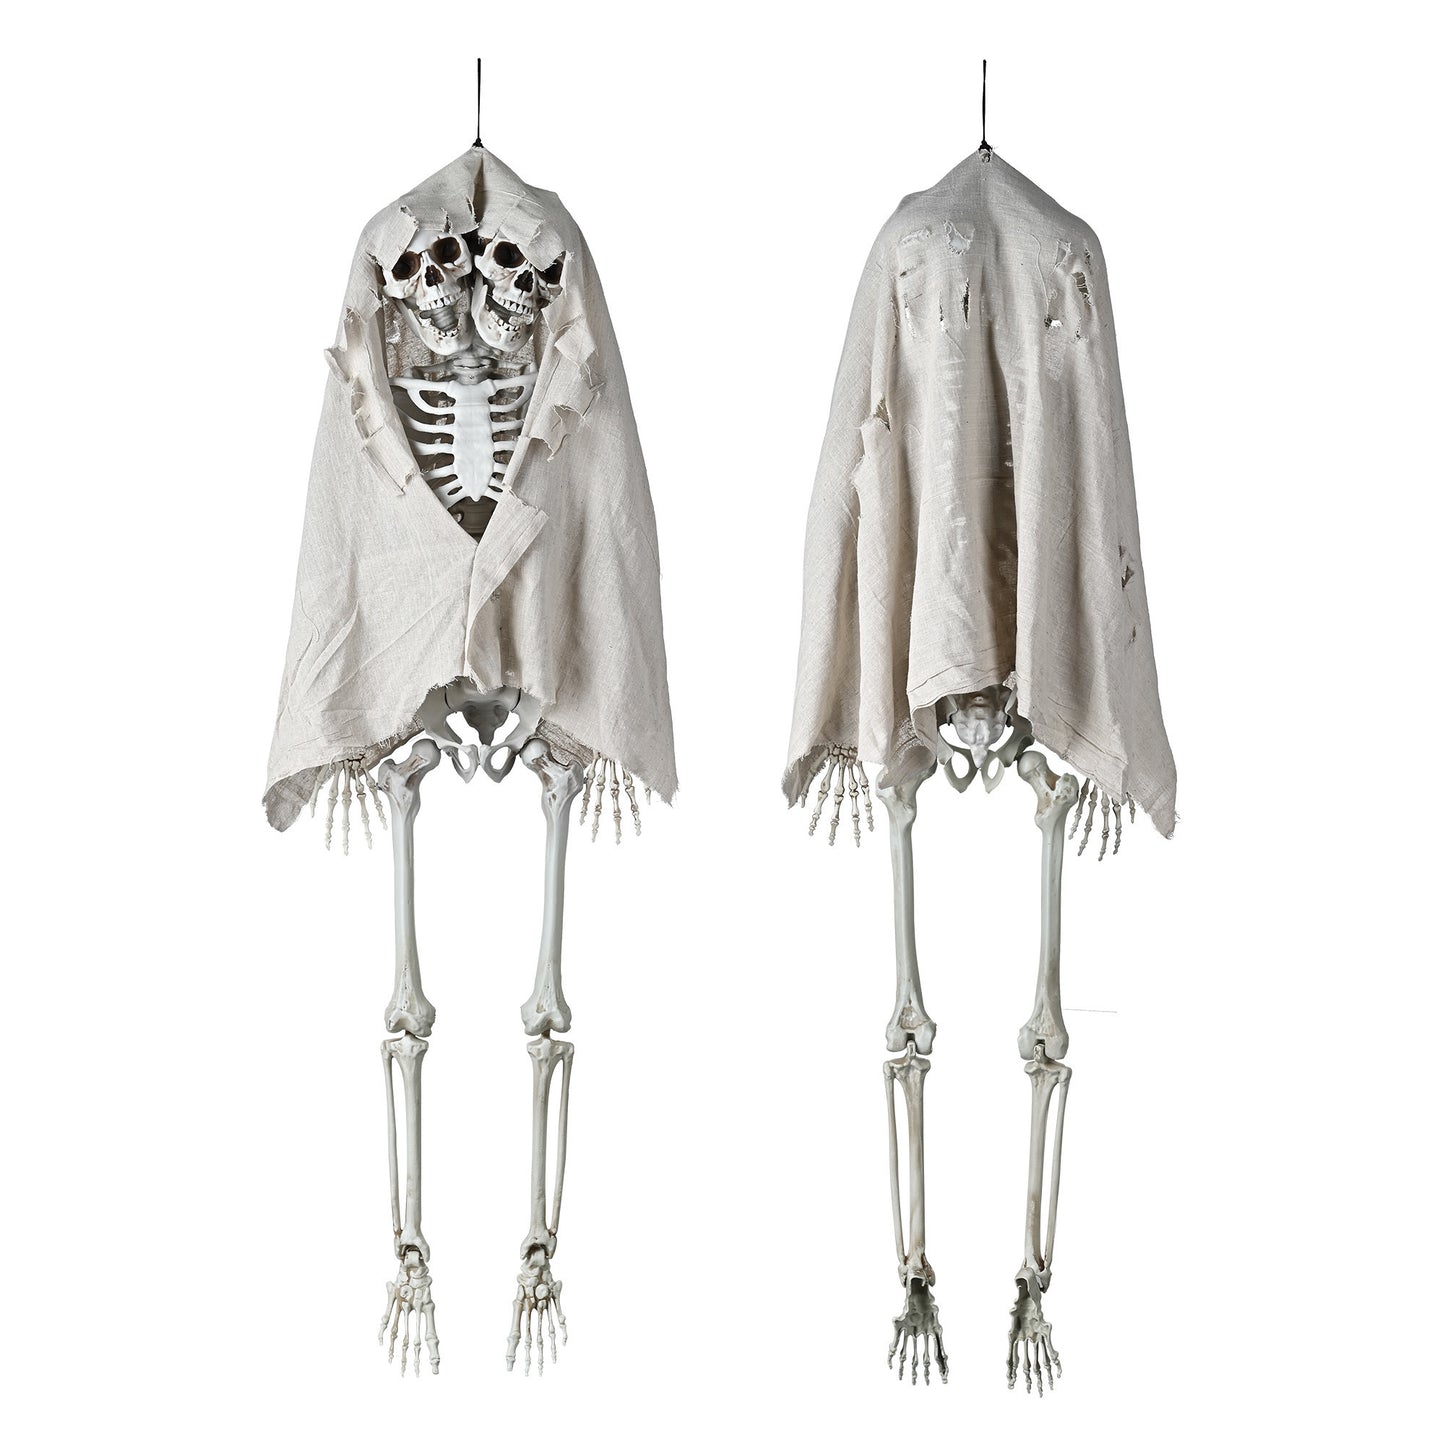 Two-Headed Skeleton Halloween